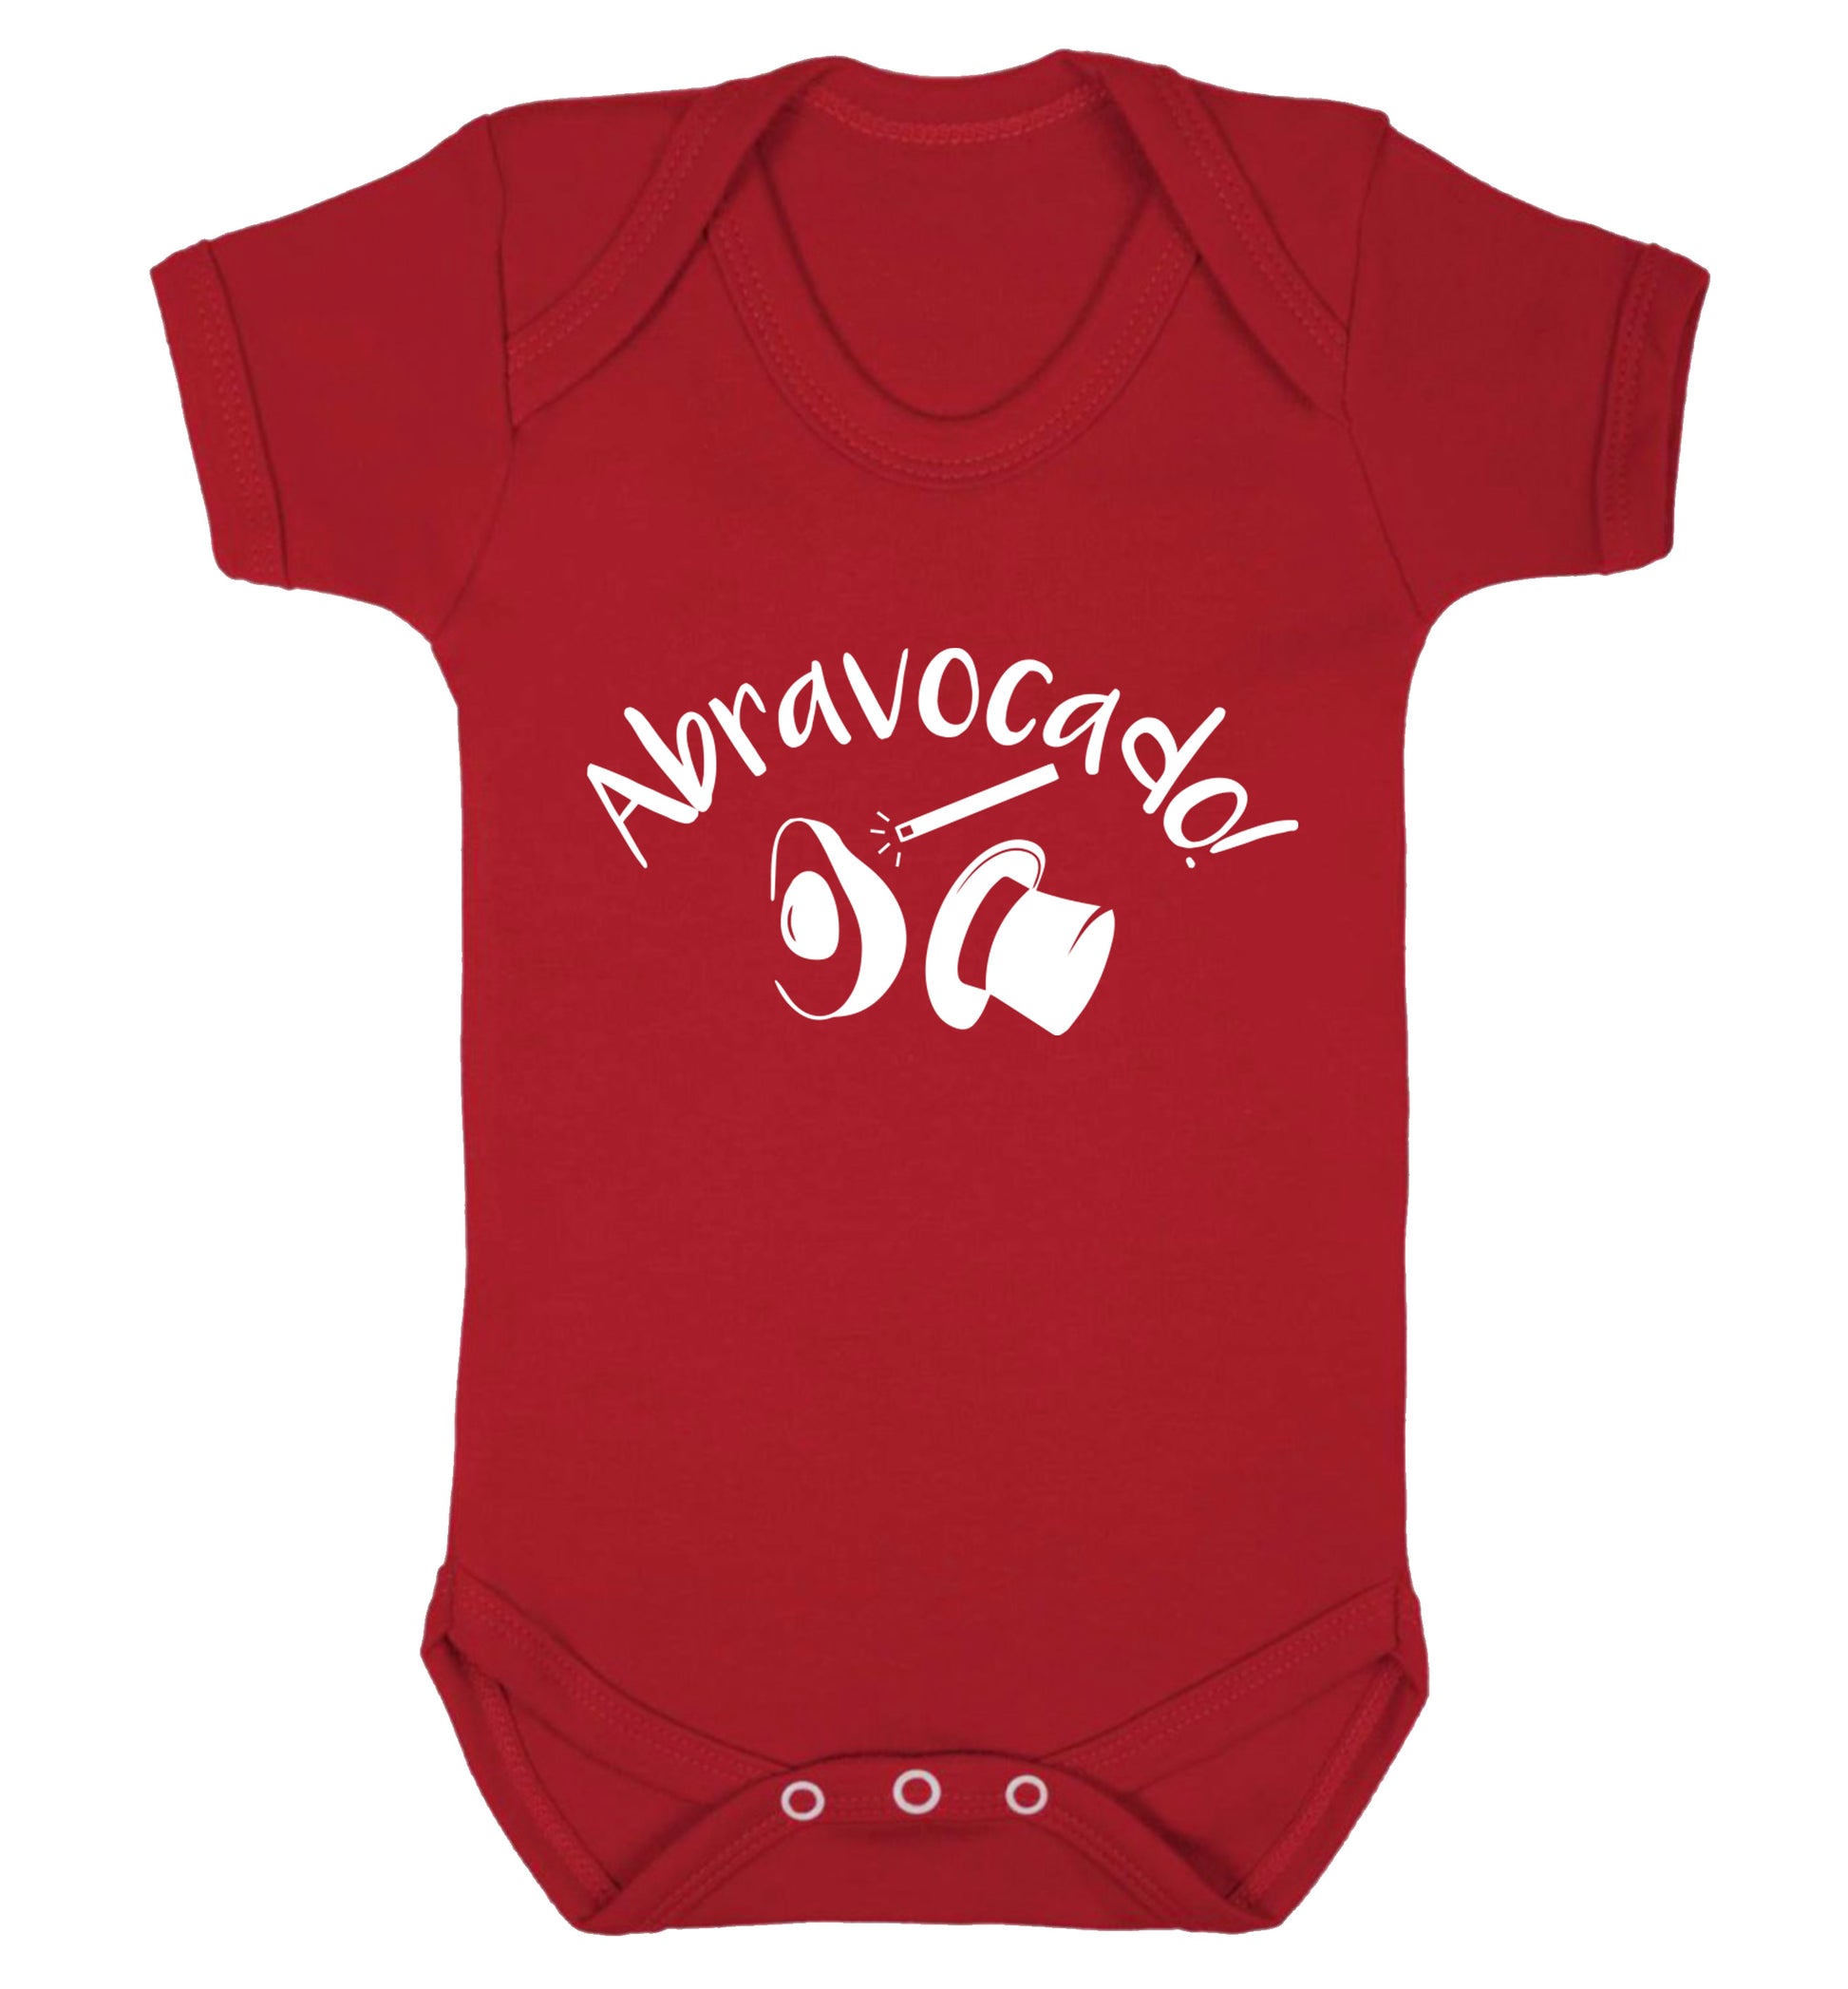 Abravocado Baby Vest red 18-24 months